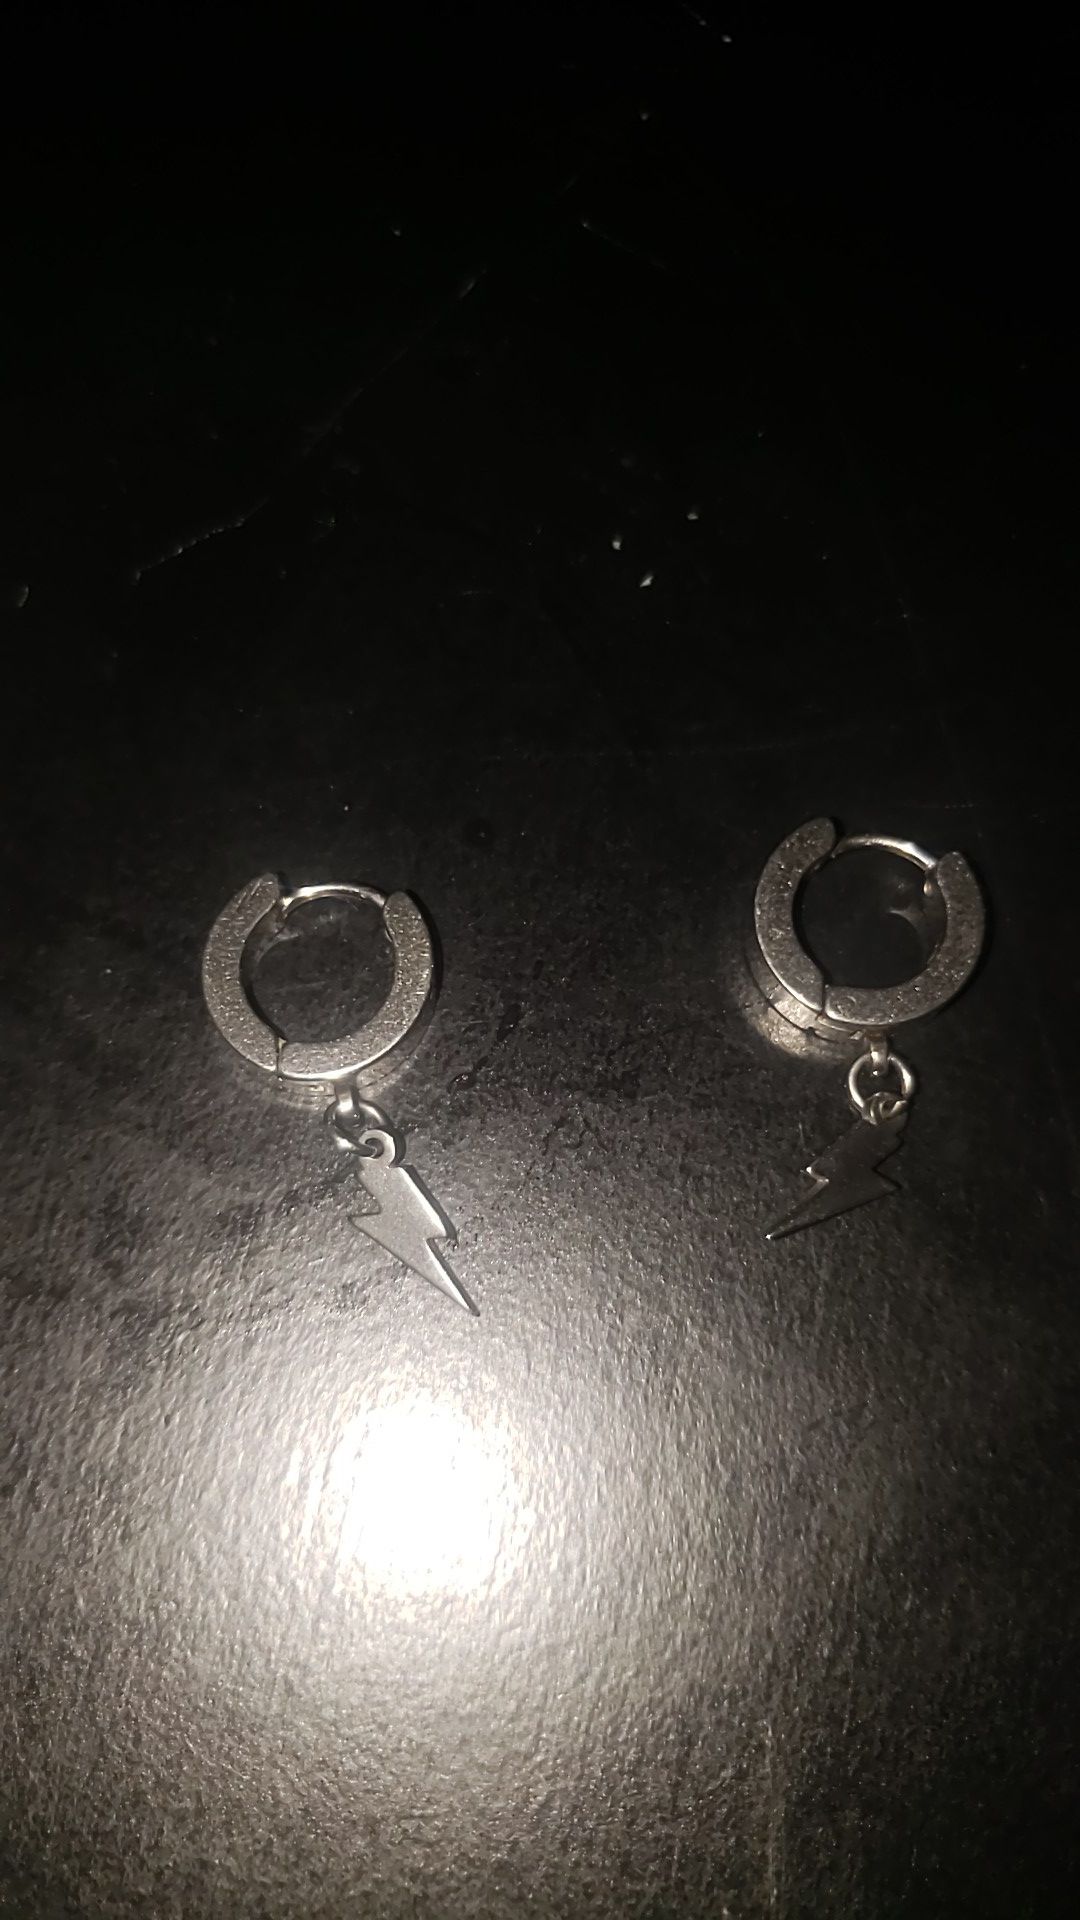 Dangly / hanging earrings